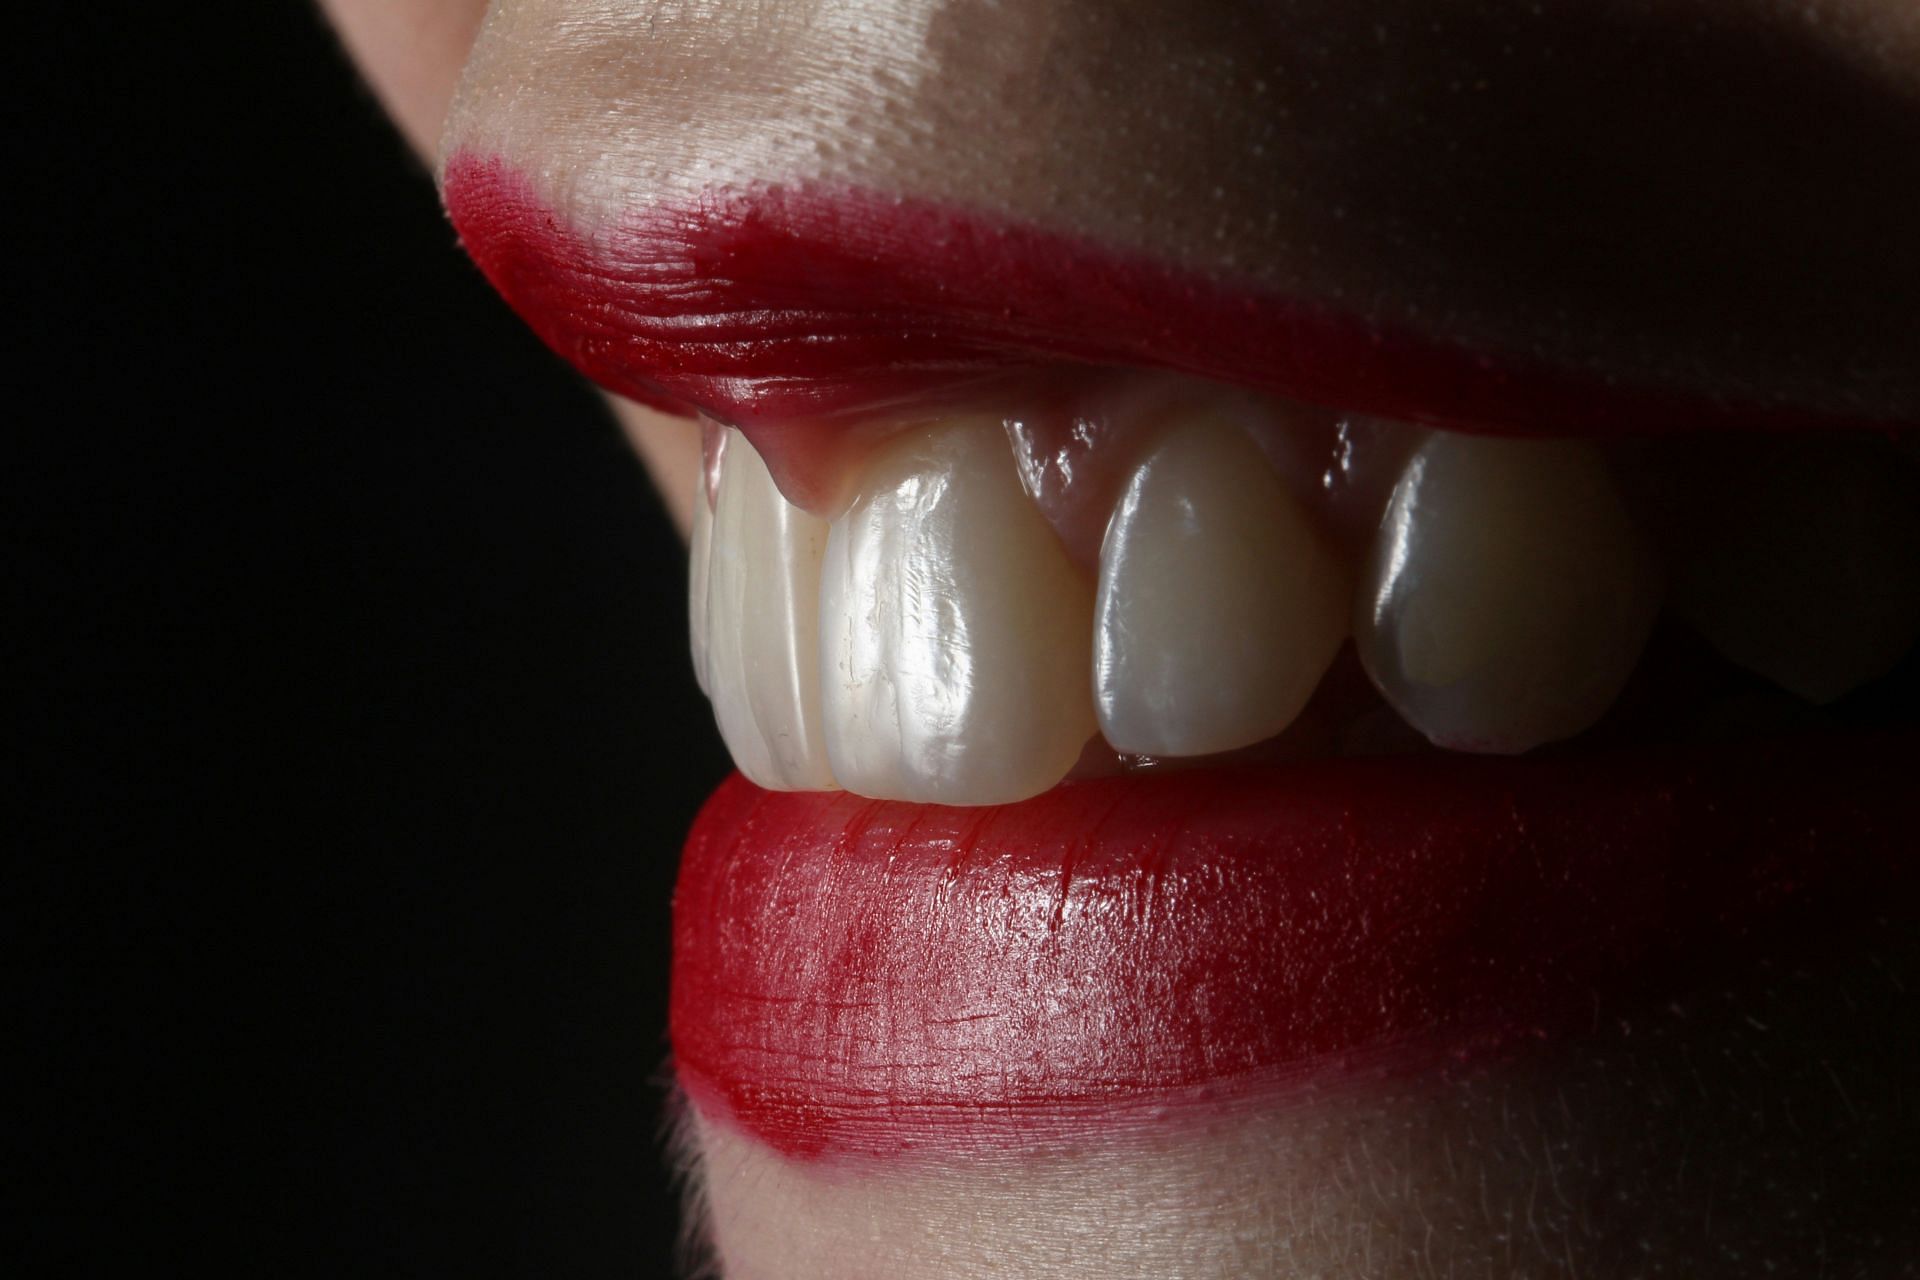 Dental hygiene is important. (Image via Unsplash/ Rafael Rocha)